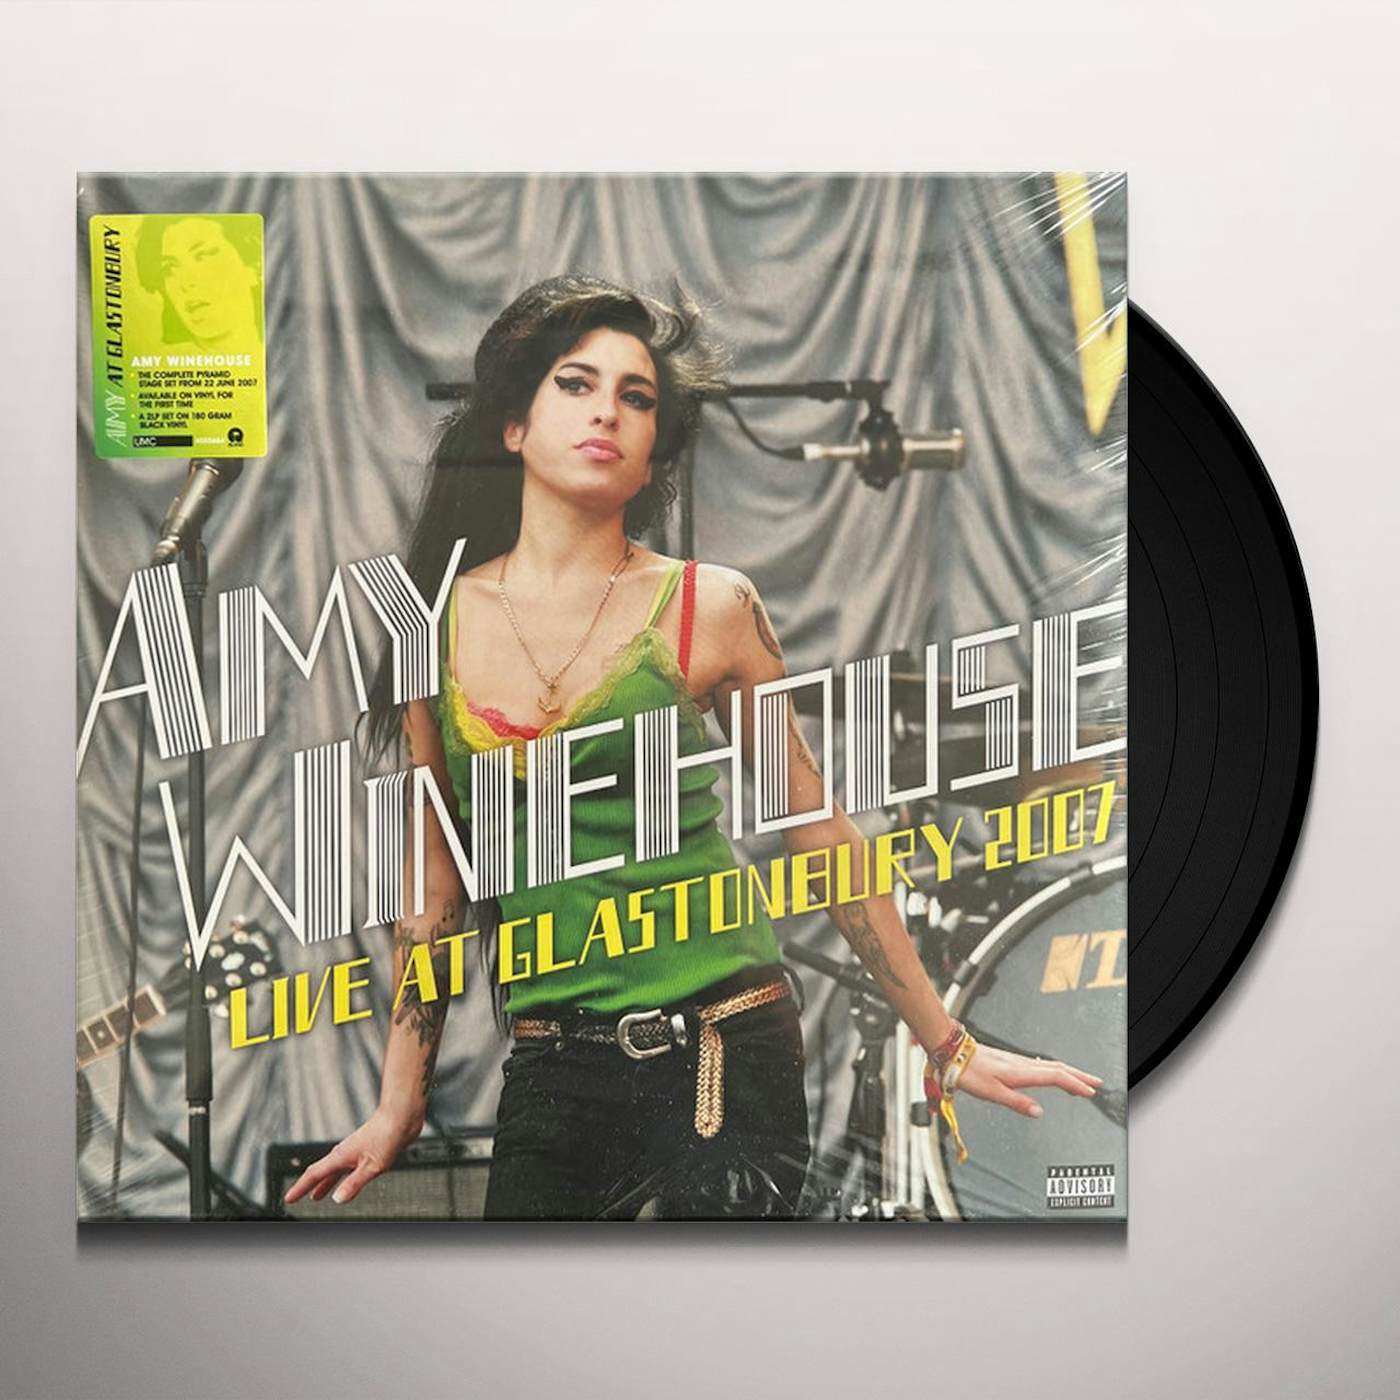 Amy Winehouse LIVE AT GLASTONBURY 2007 (2LP) Vinyl Record